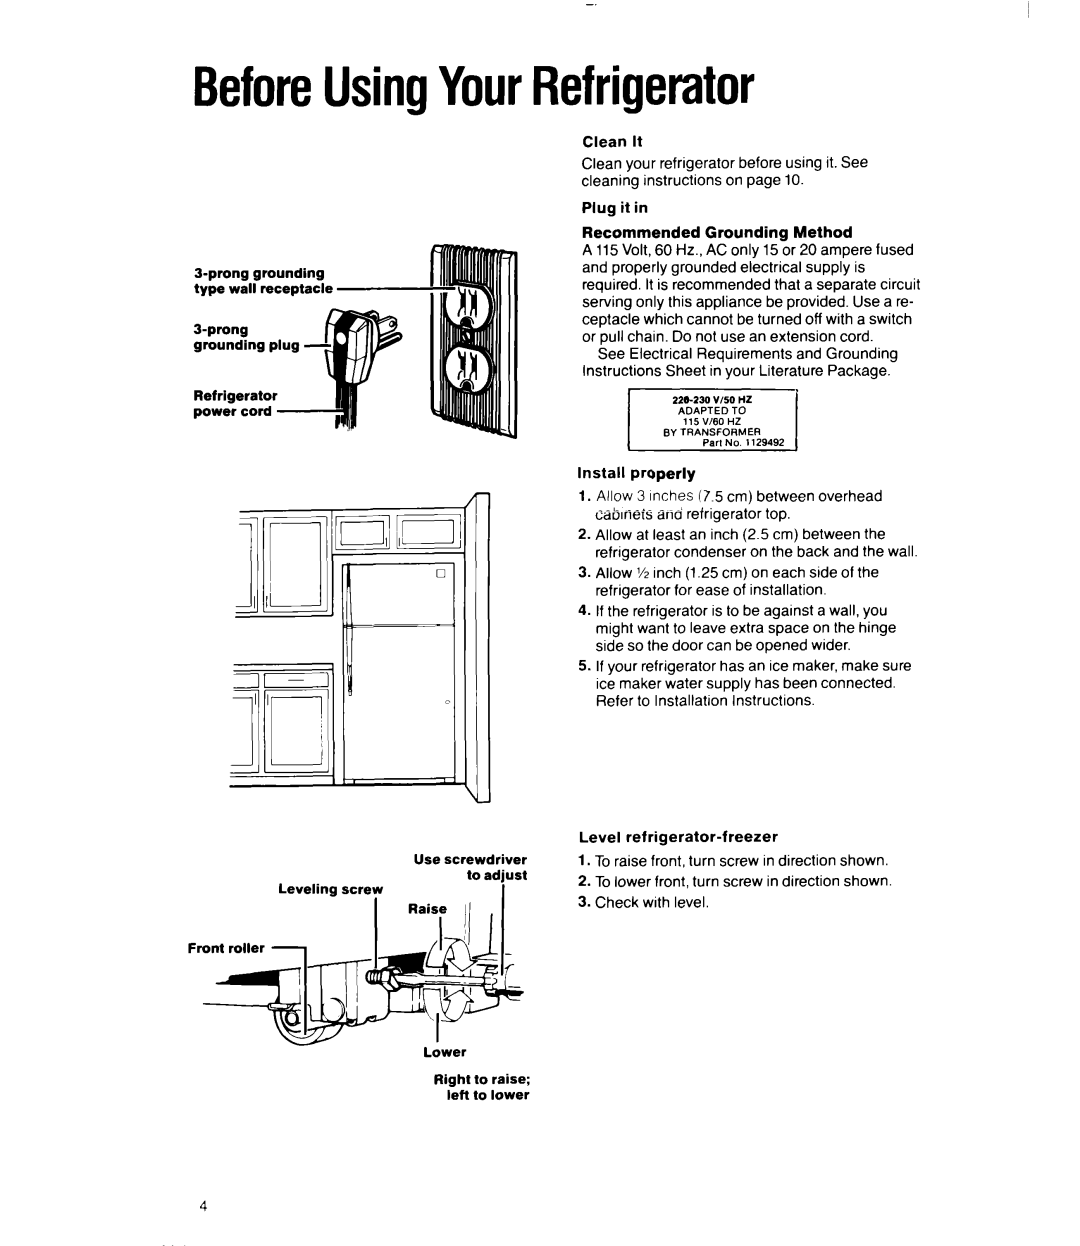 Whirlpool 3Ell8GK manual BeforeUsingYourRefrigerator, BJggF+ 949*j 